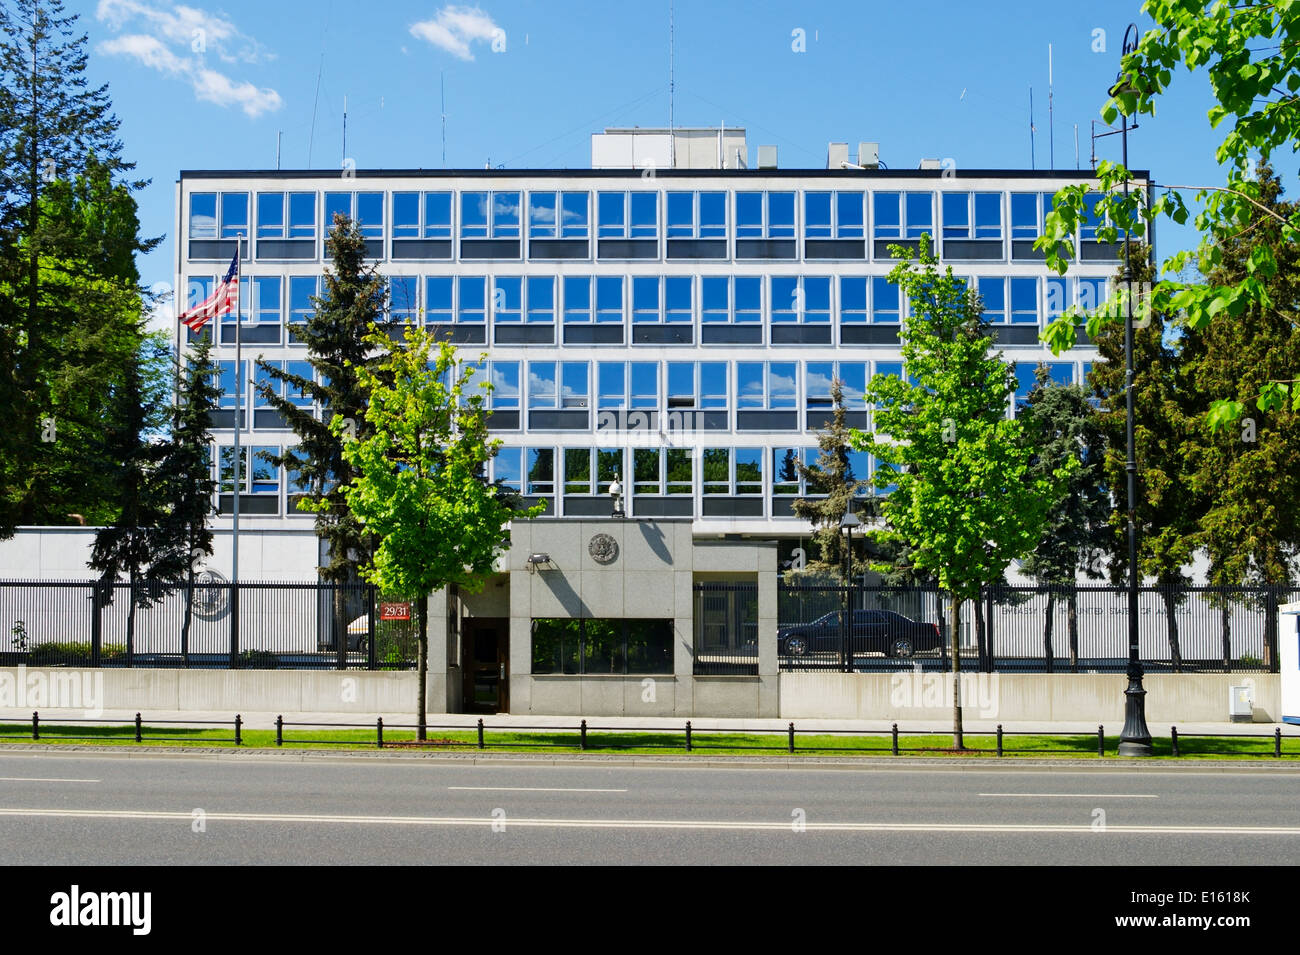 USA Embassy building in Warsaw, Poland Stock Photo - Alamy